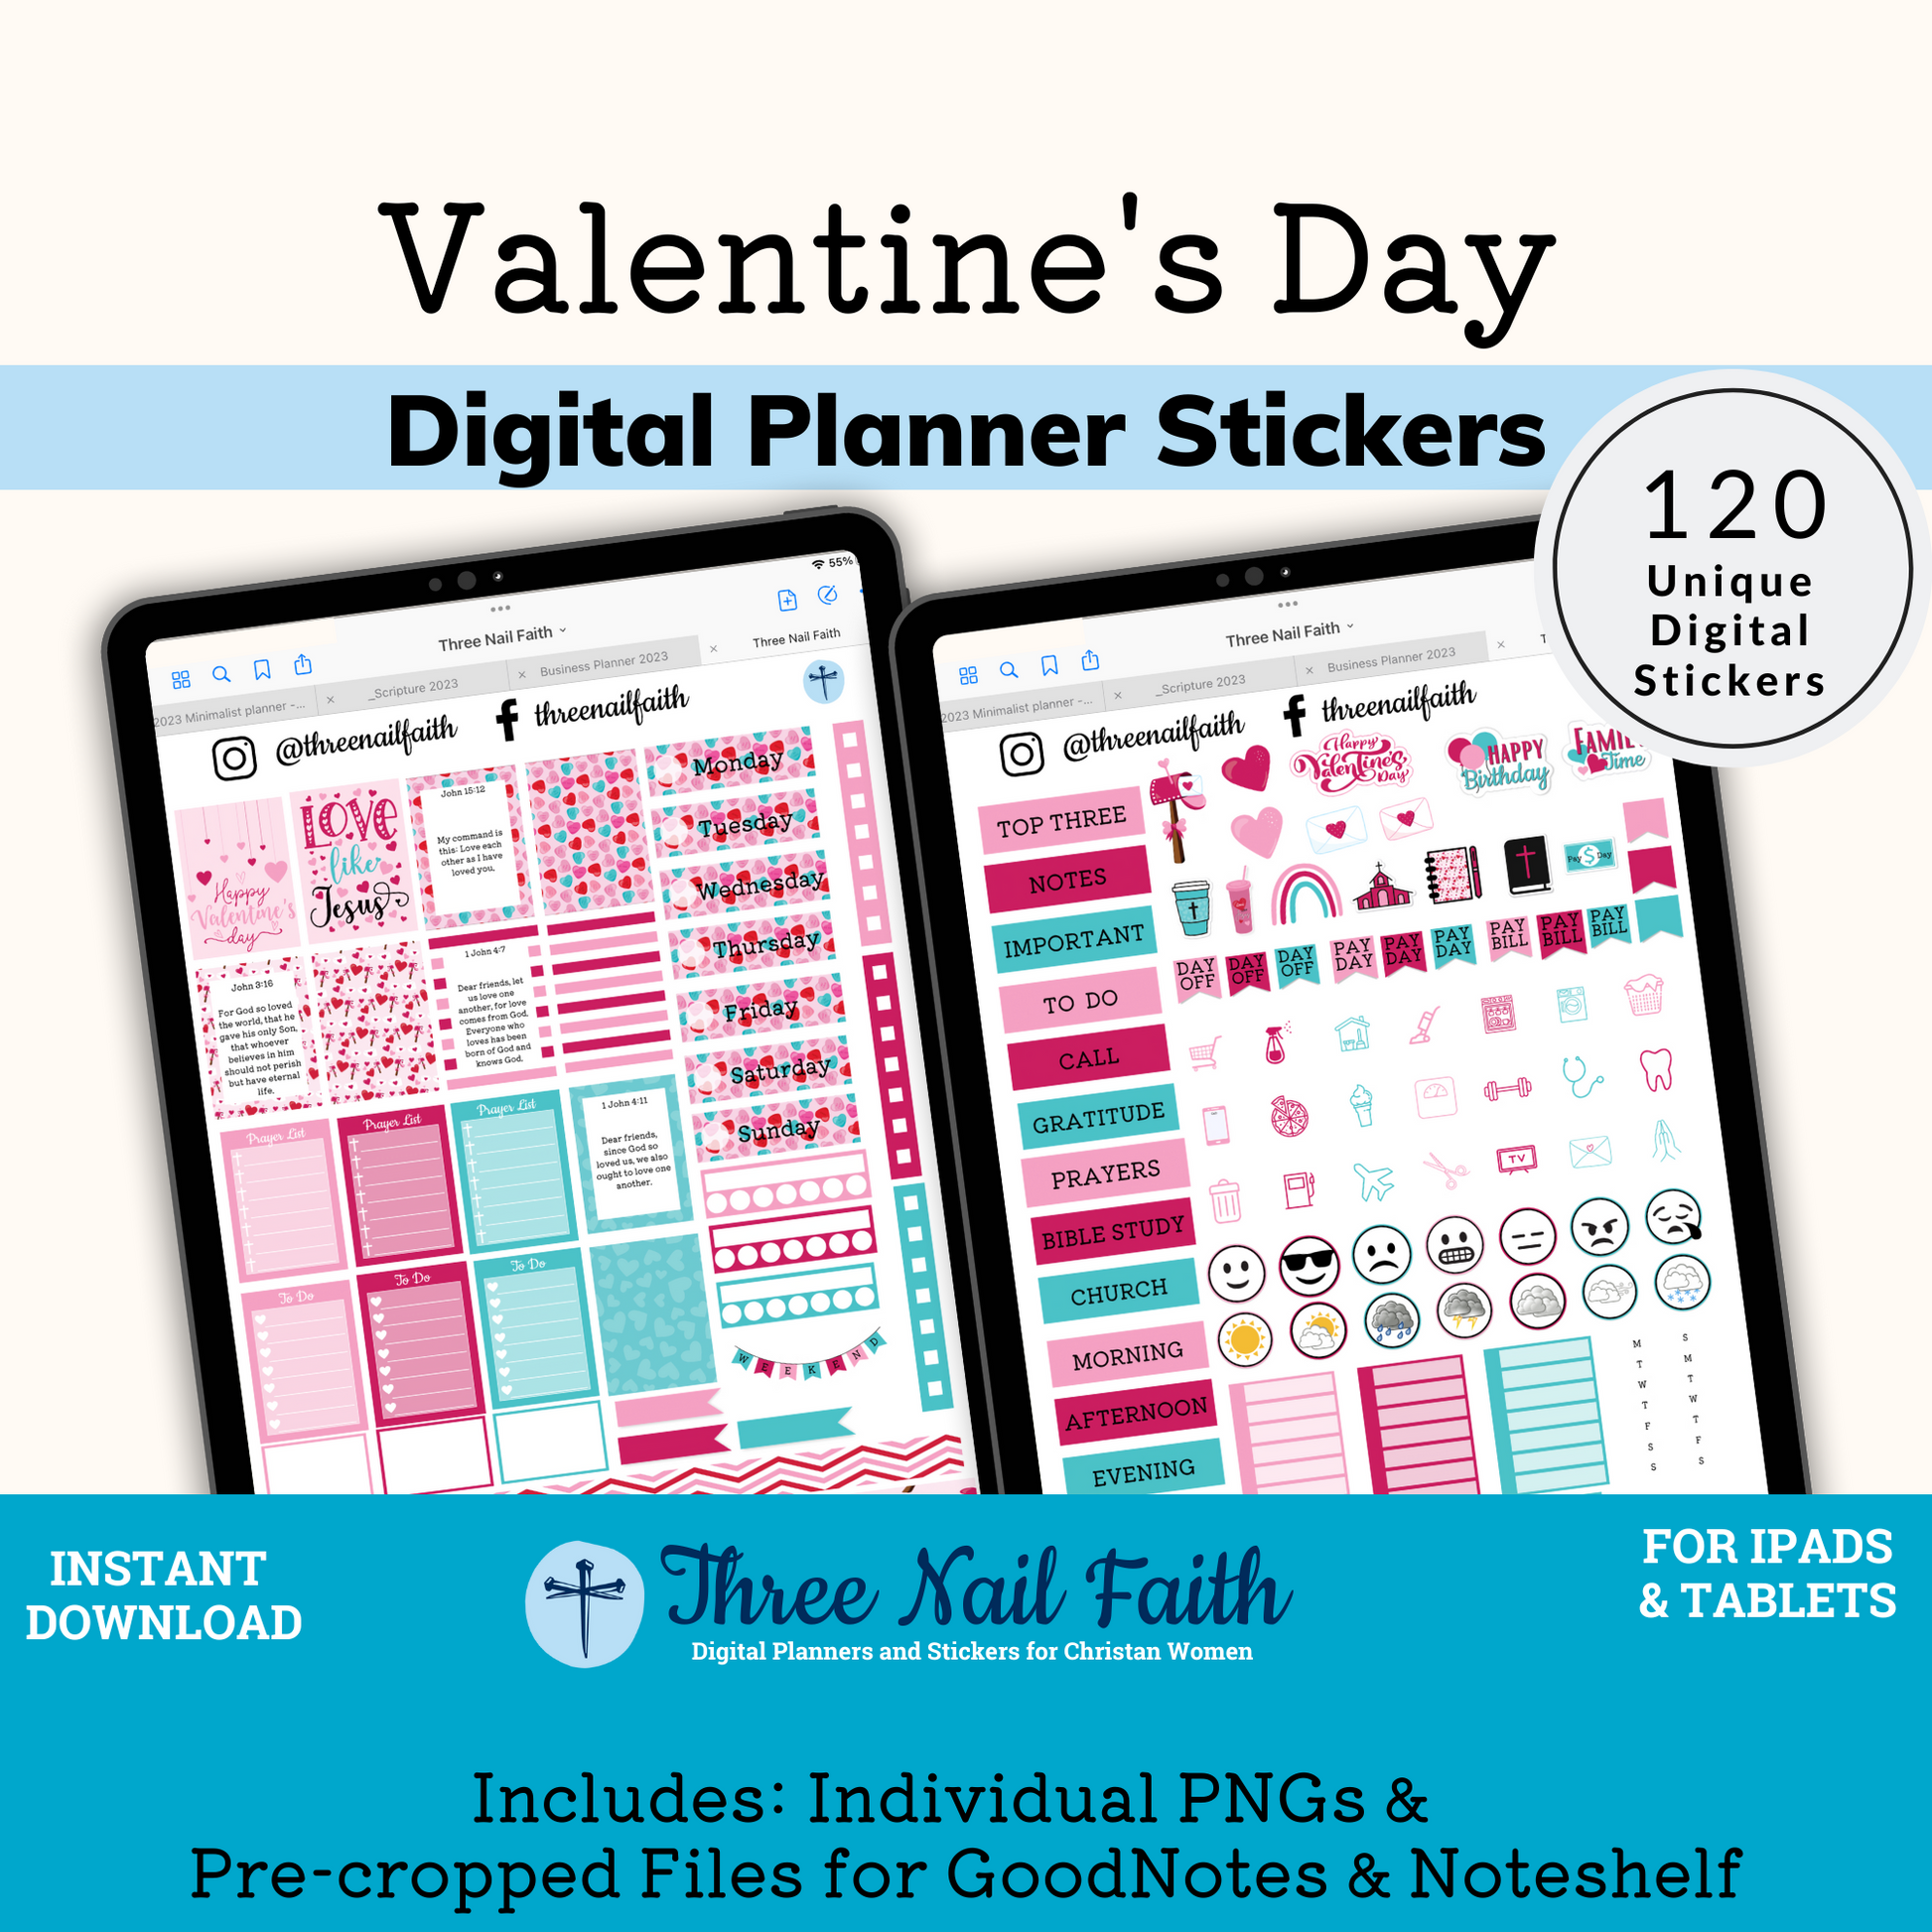 valentines day digital sticker kit with 120 Digital stickers